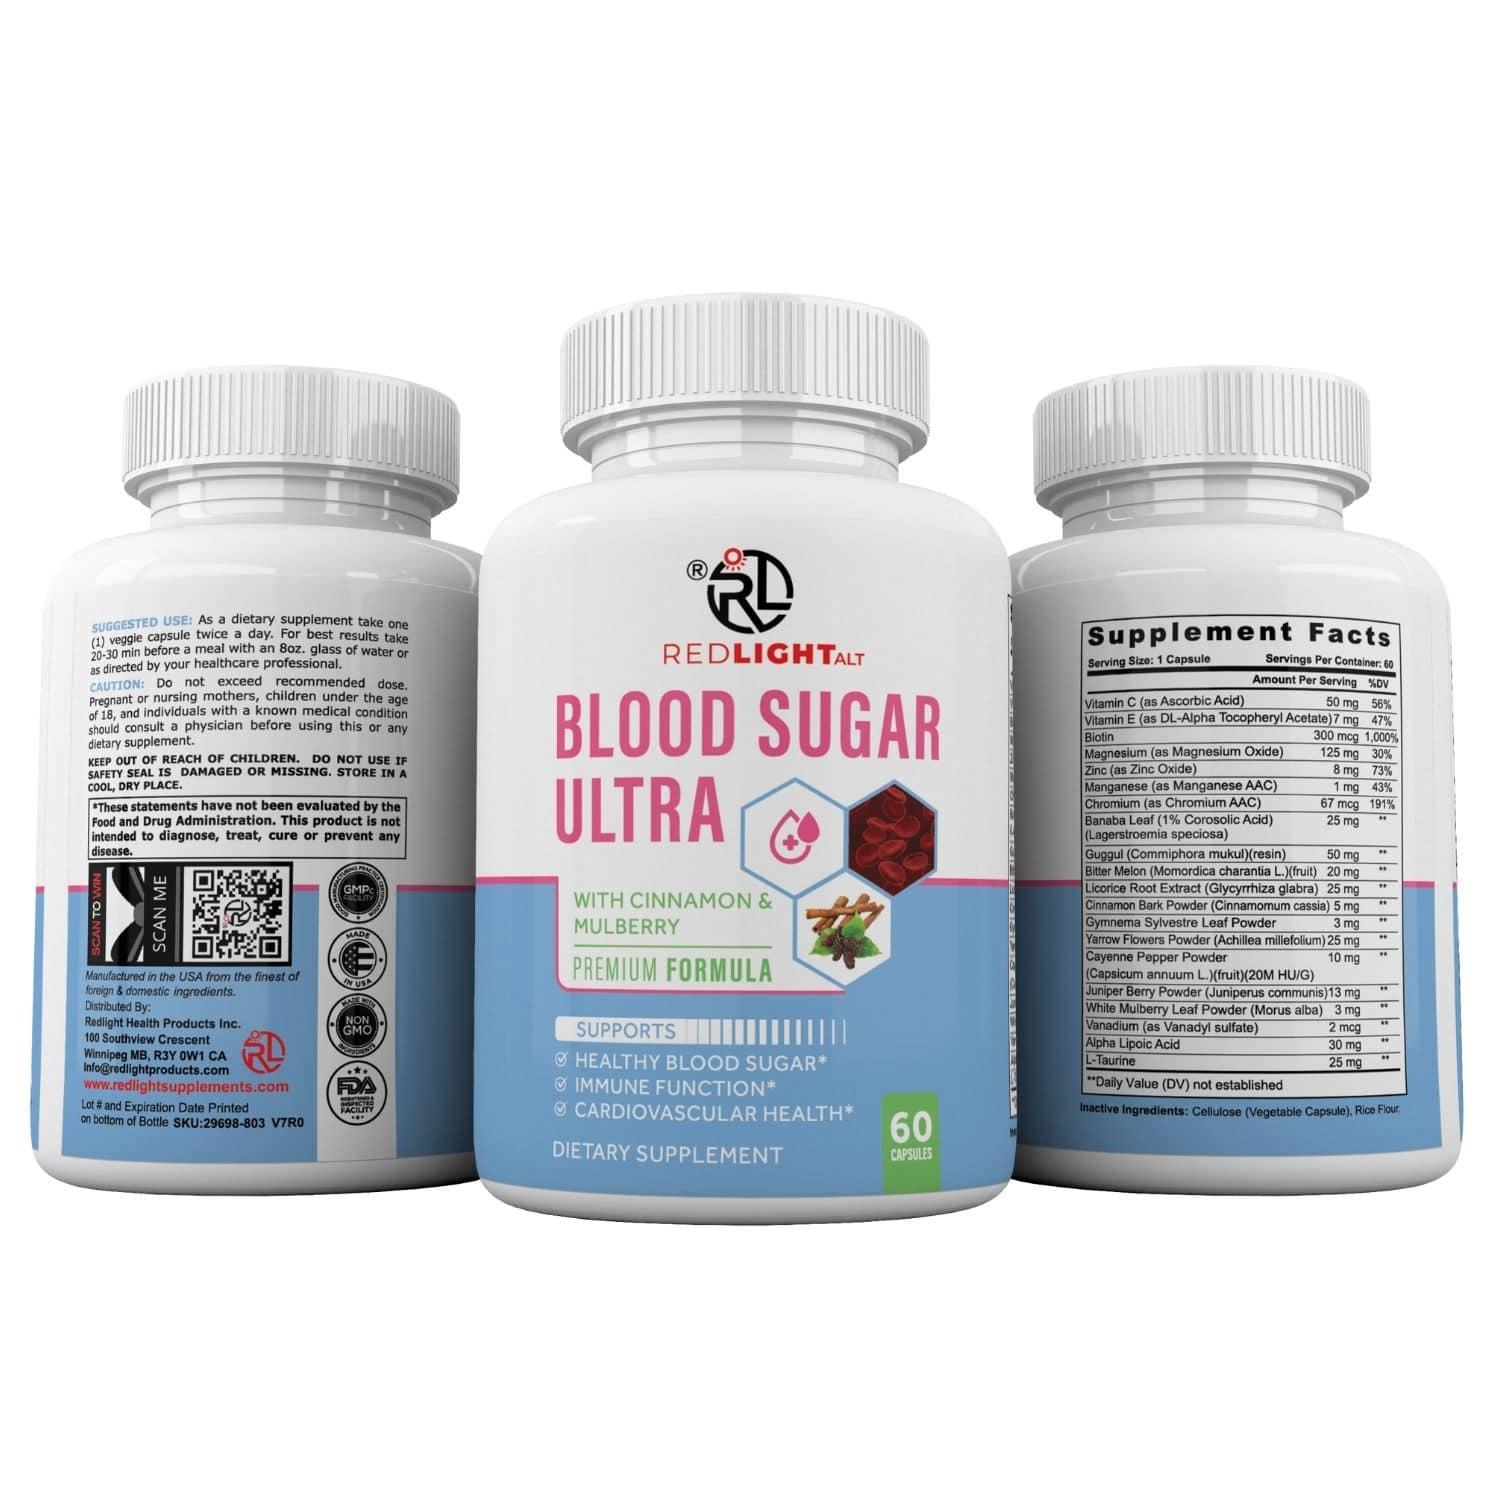 Redlight ALT blood sugar support supplement for diabetes